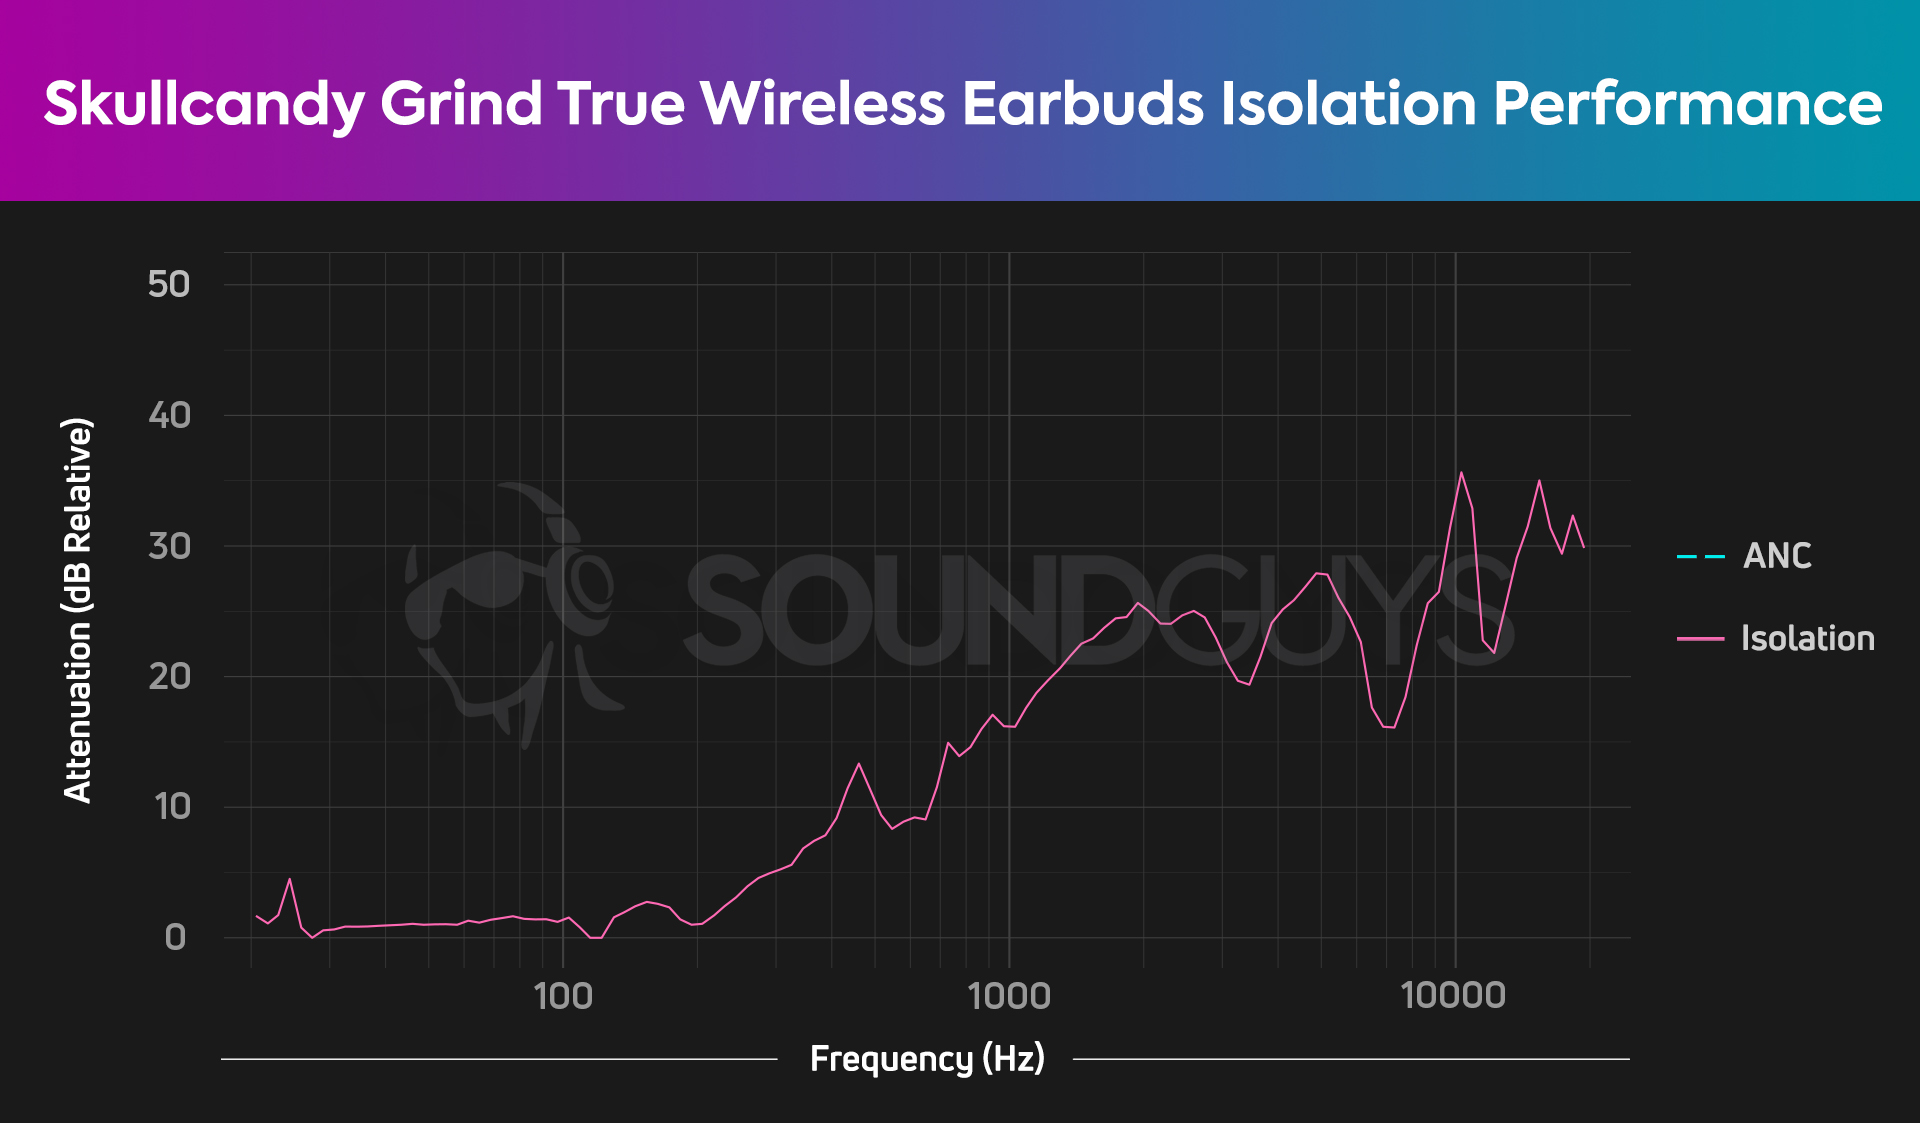 Skullcandy Grind True Wireless Earbuds isolation chart